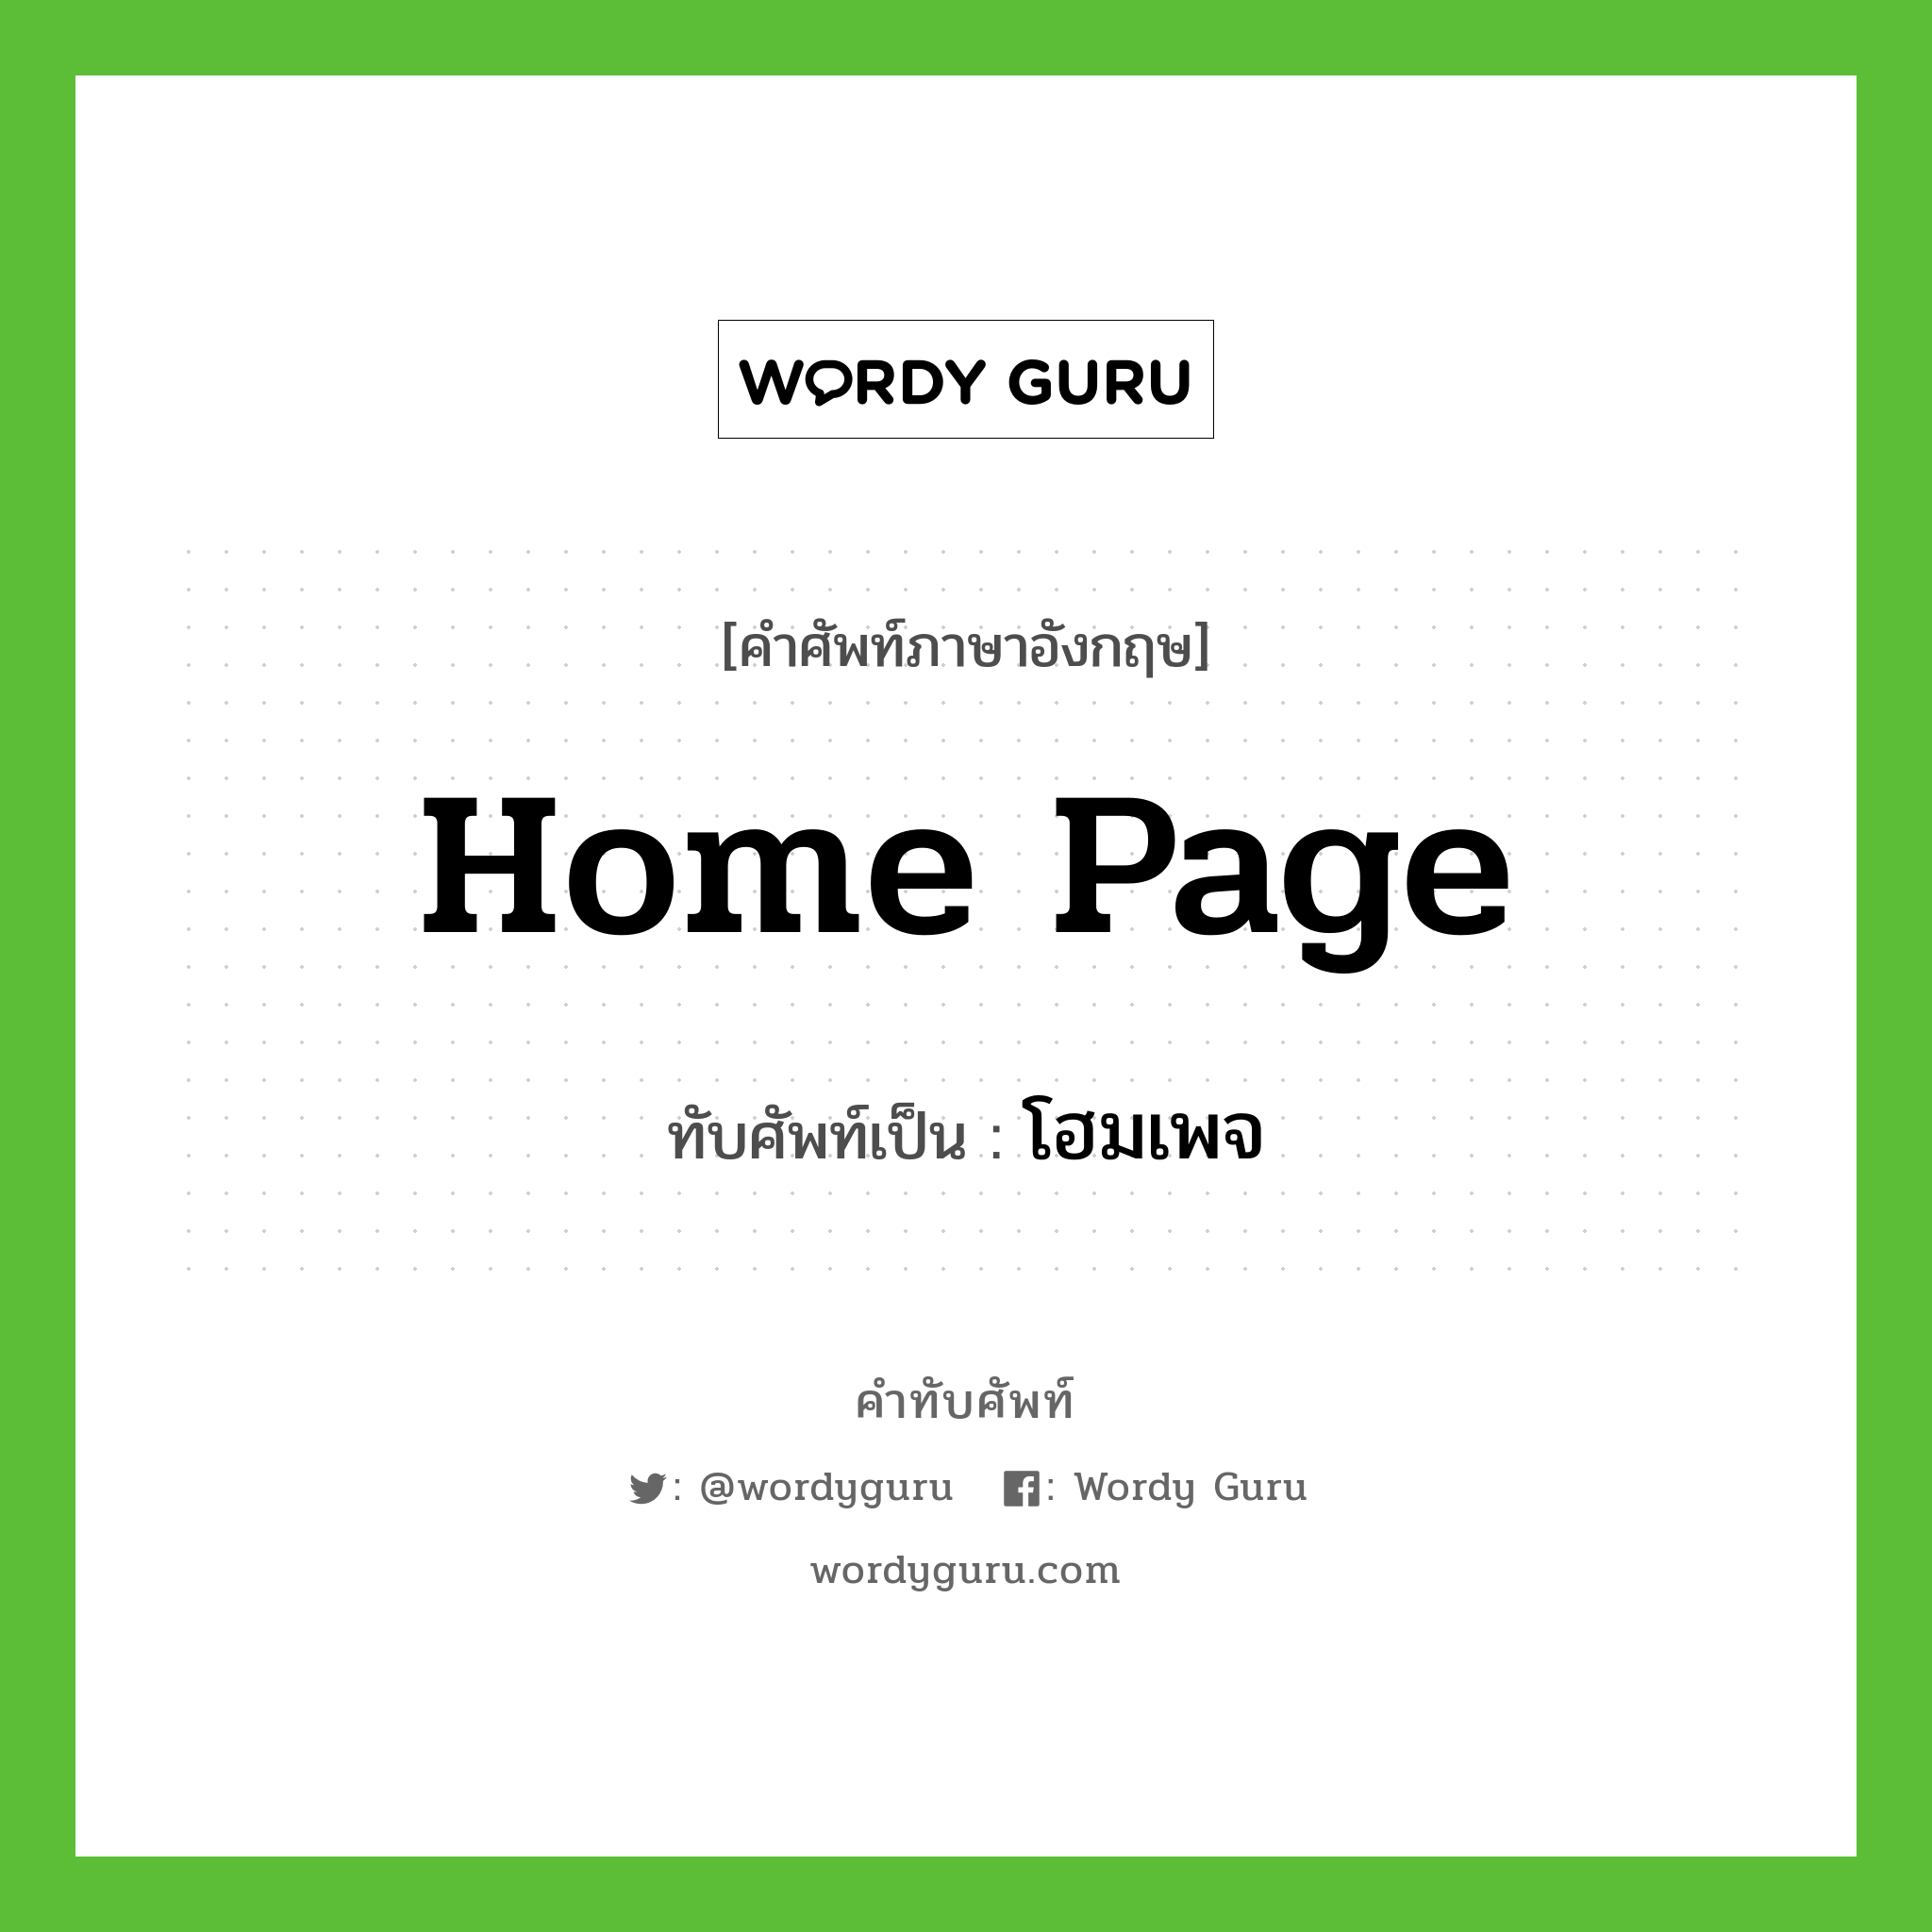 home page เขียนเป็นคำไทยว่าอะไร?, คำศัพท์ภาษาอังกฤษ home page ทับศัพท์เป็น โฮมเพจ